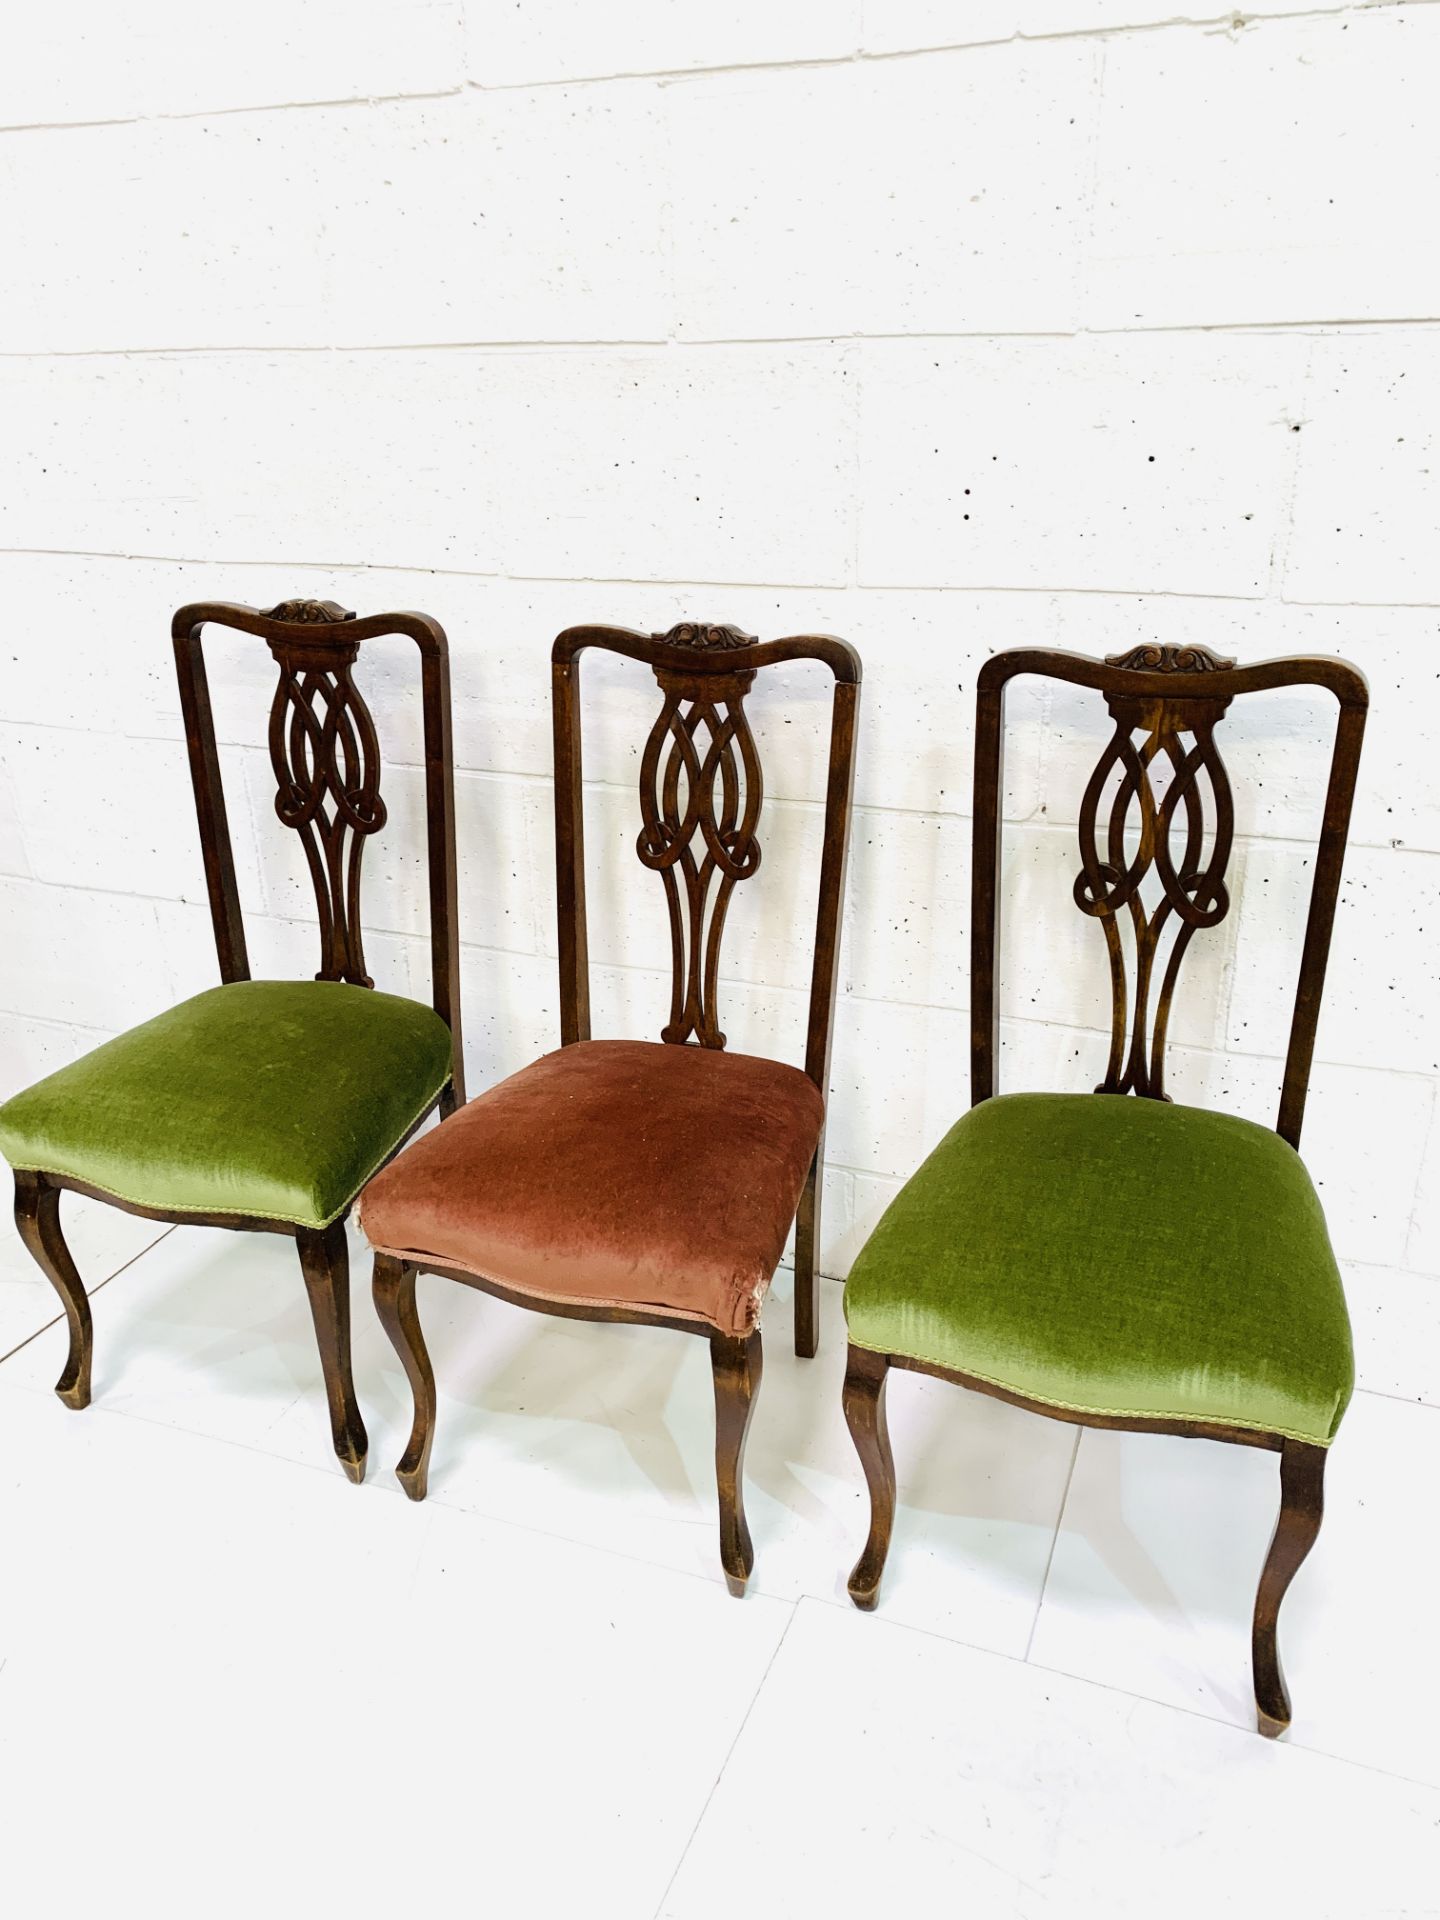 Three Georgian style mahogany dining chairs - Image 2 of 5